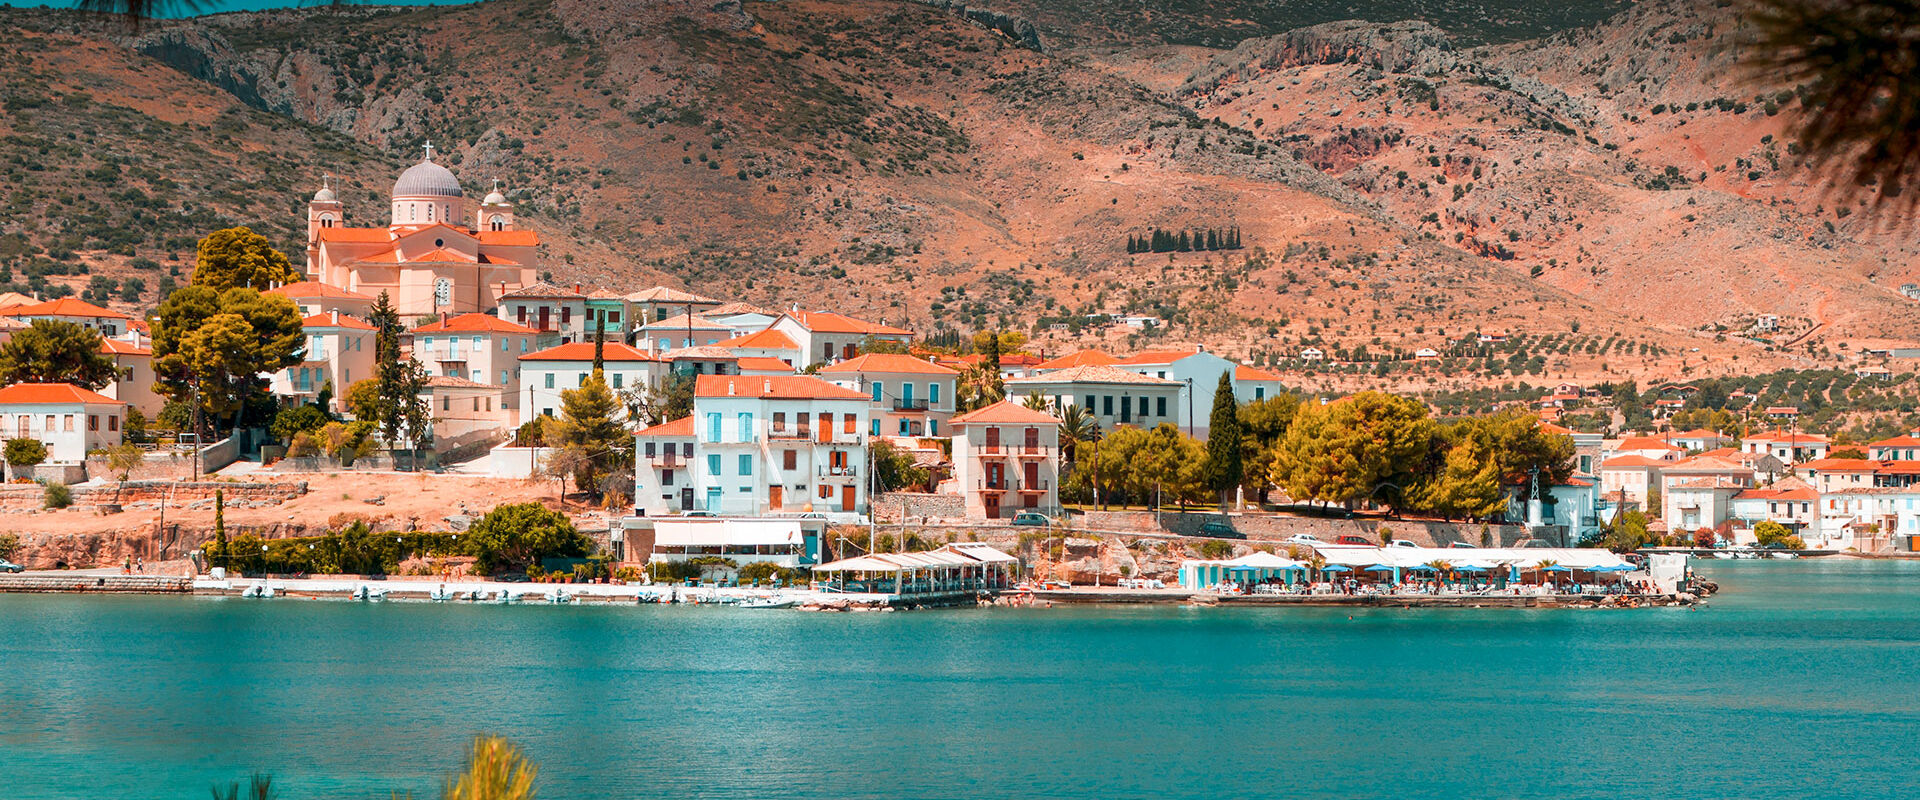 Galaxidi, coastal town in central Greece